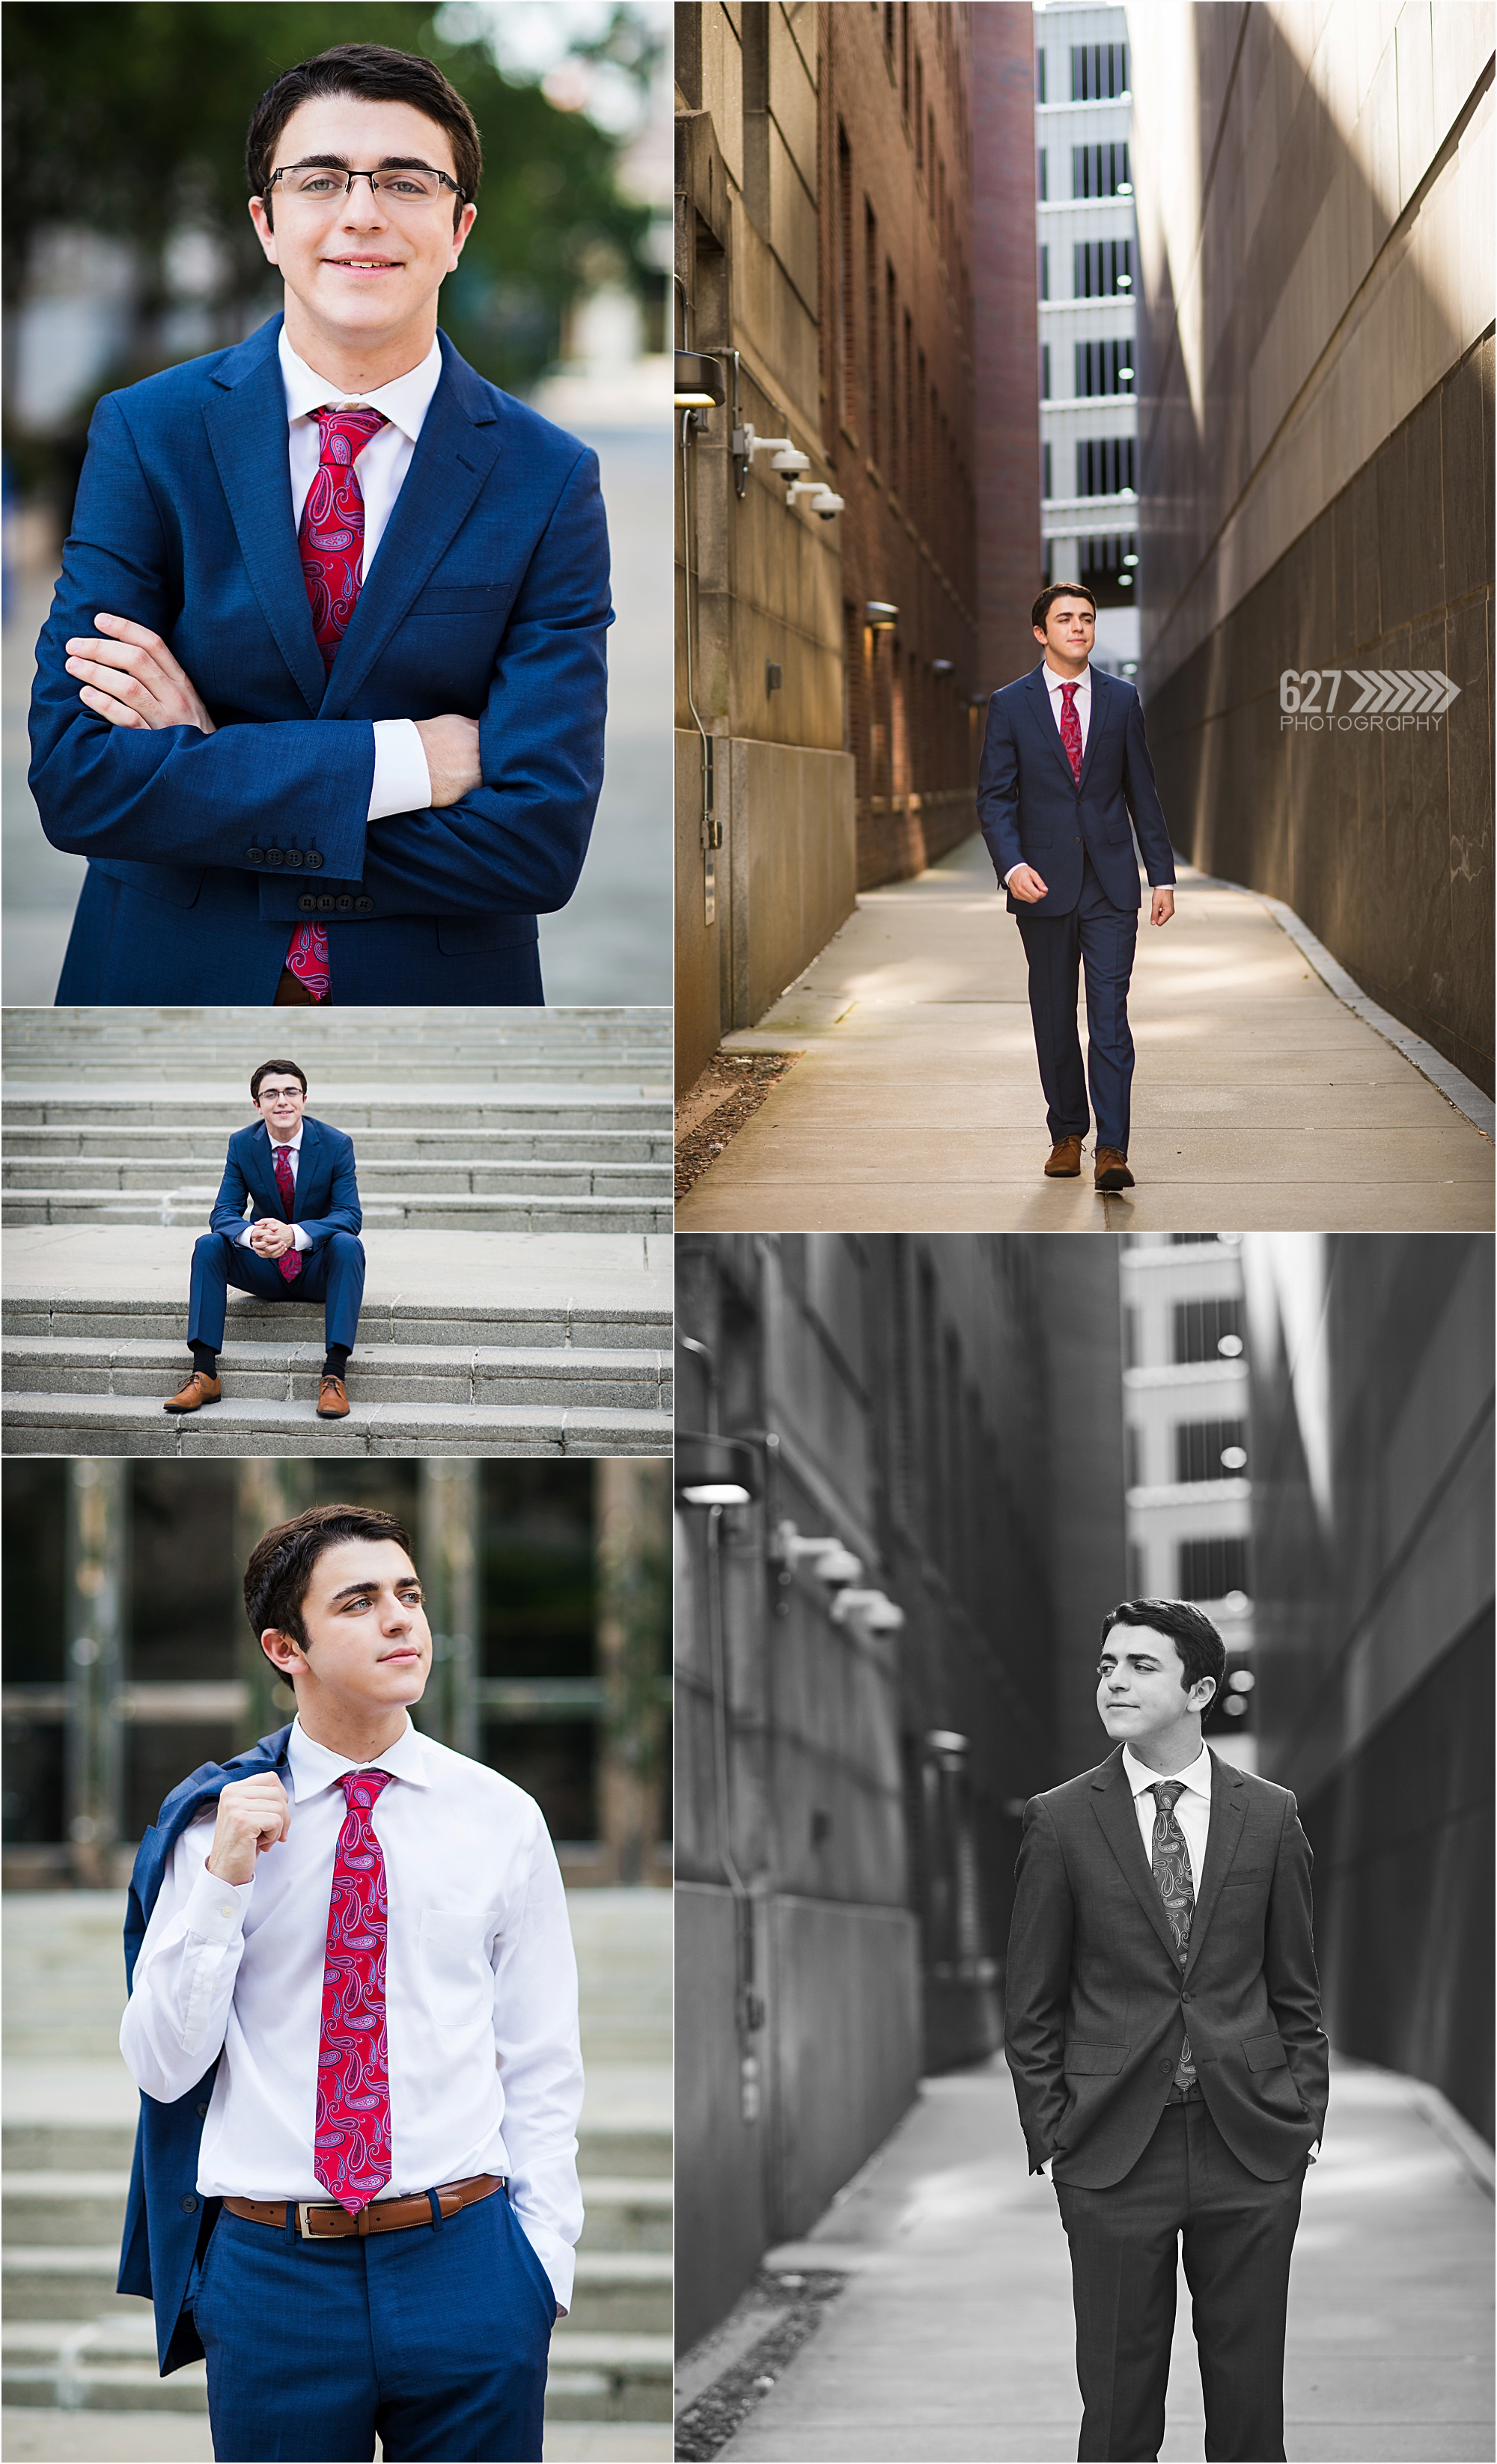 Cary Academy Senior Portraits - senior boy downtown capital building wearing blue suit